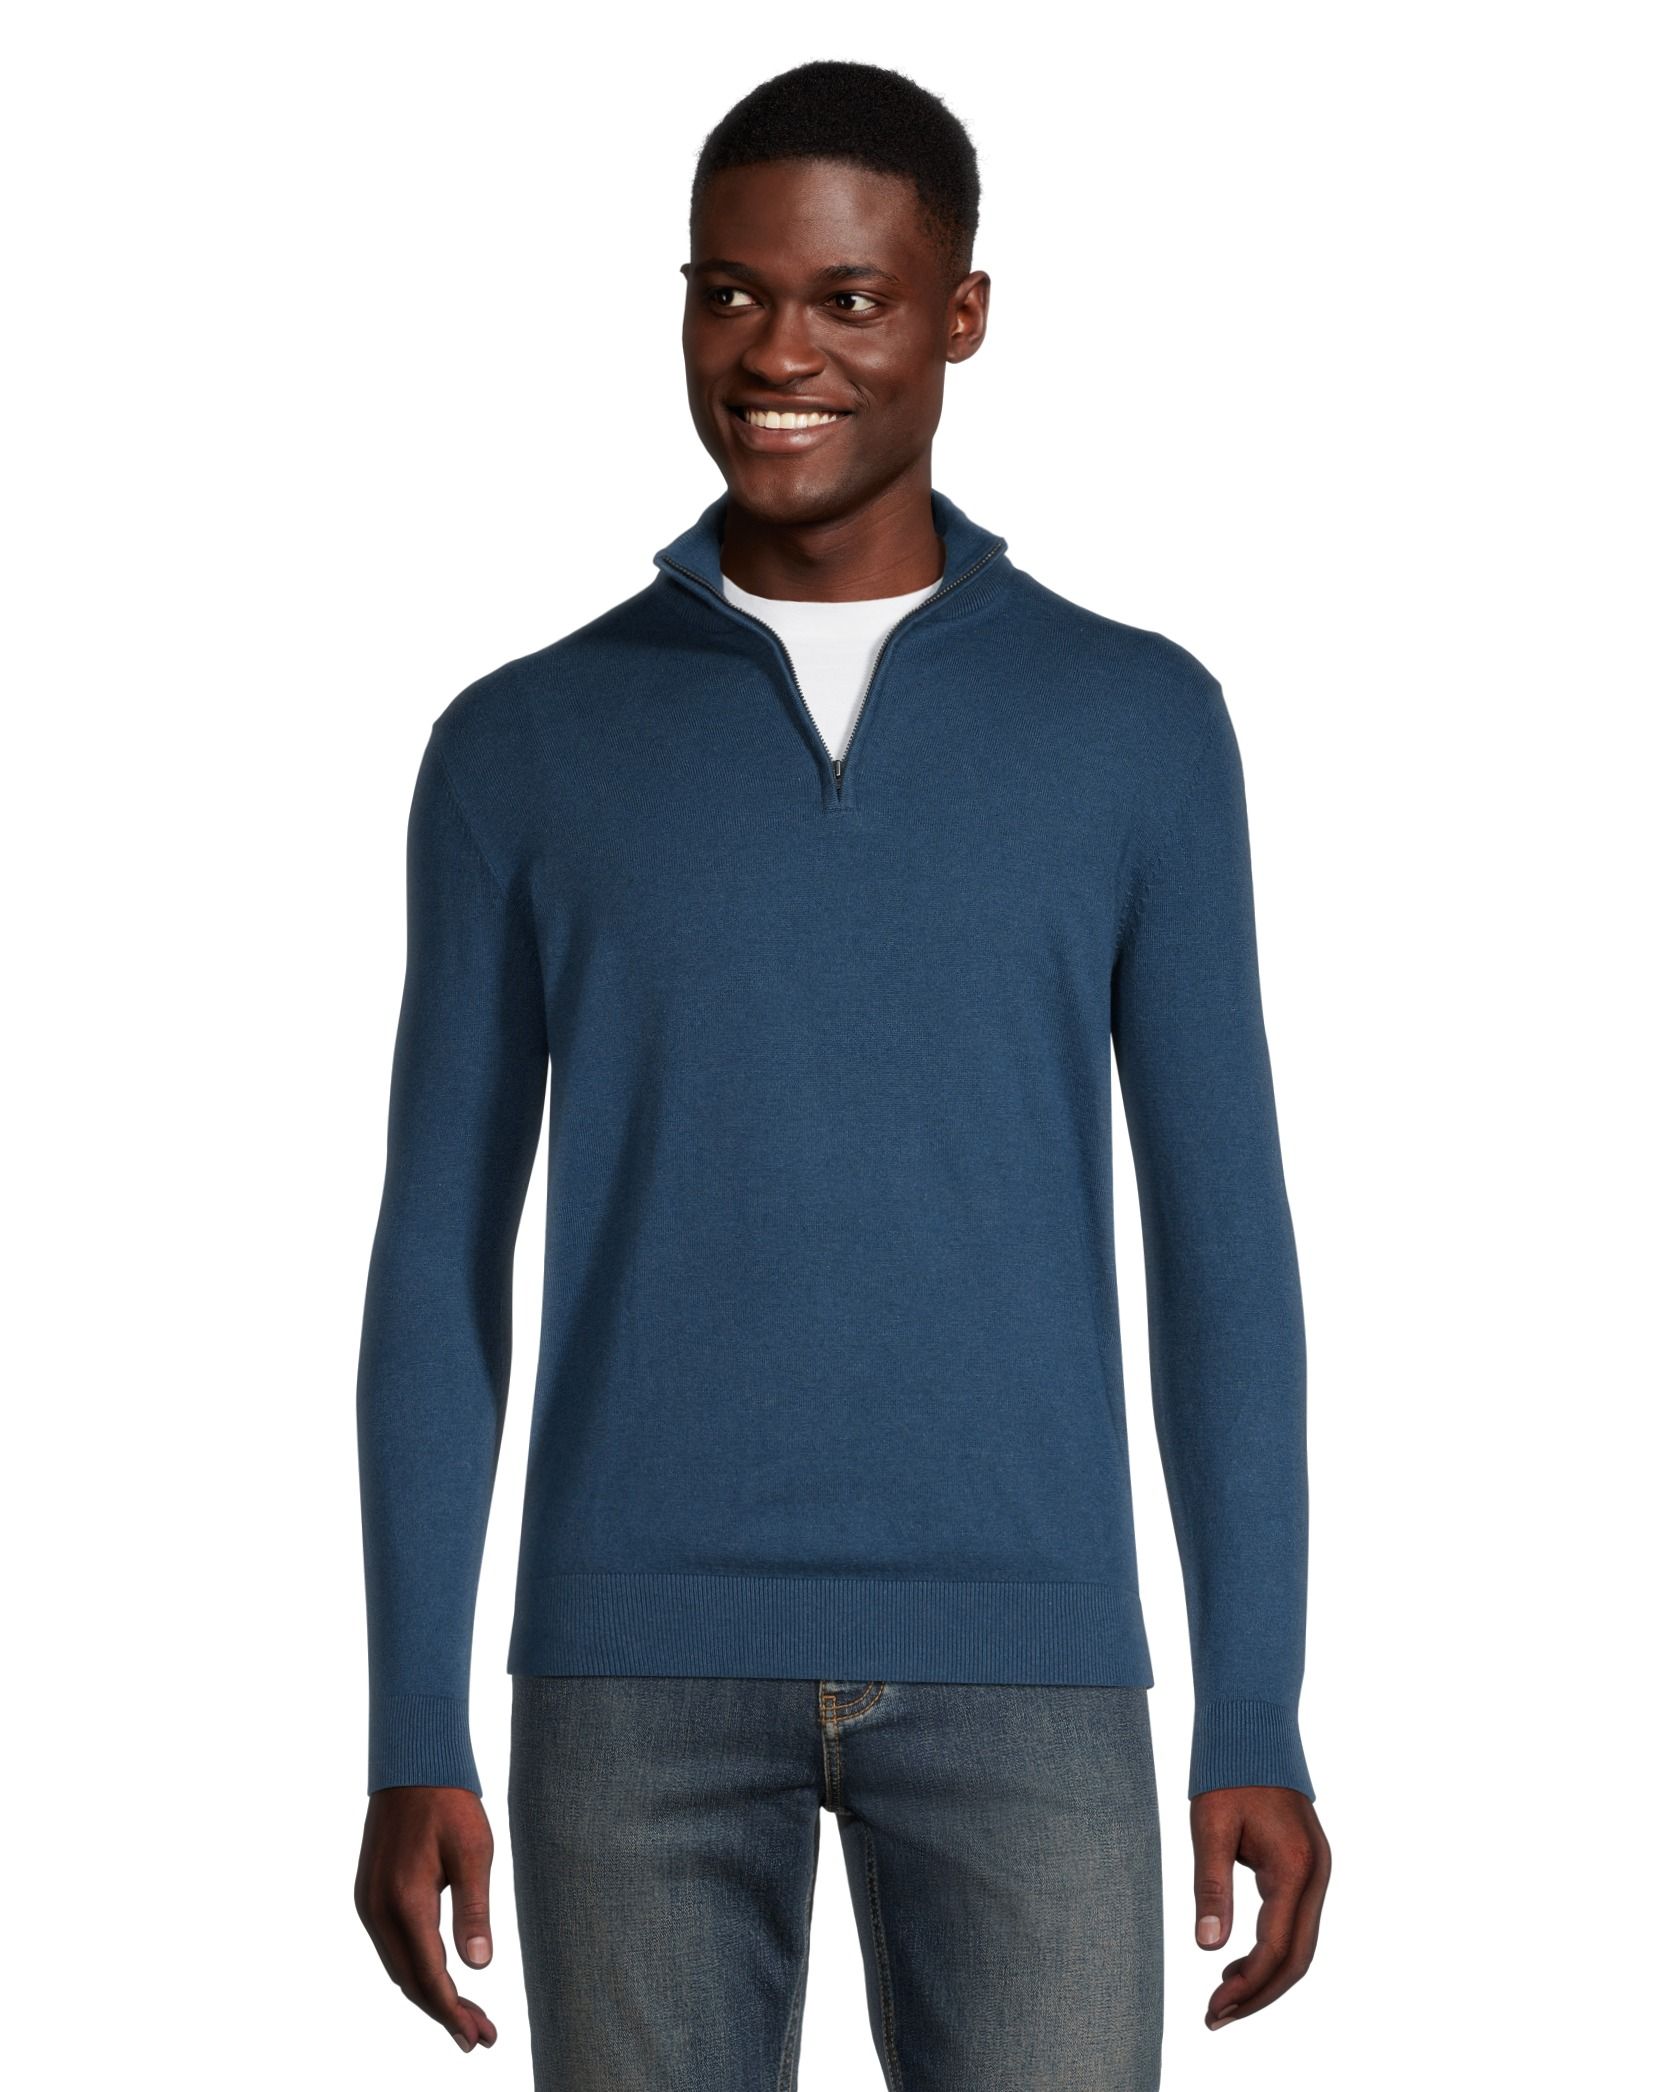 Denver Hayes Men's Soft Cotton 1/4 Zip Sweater